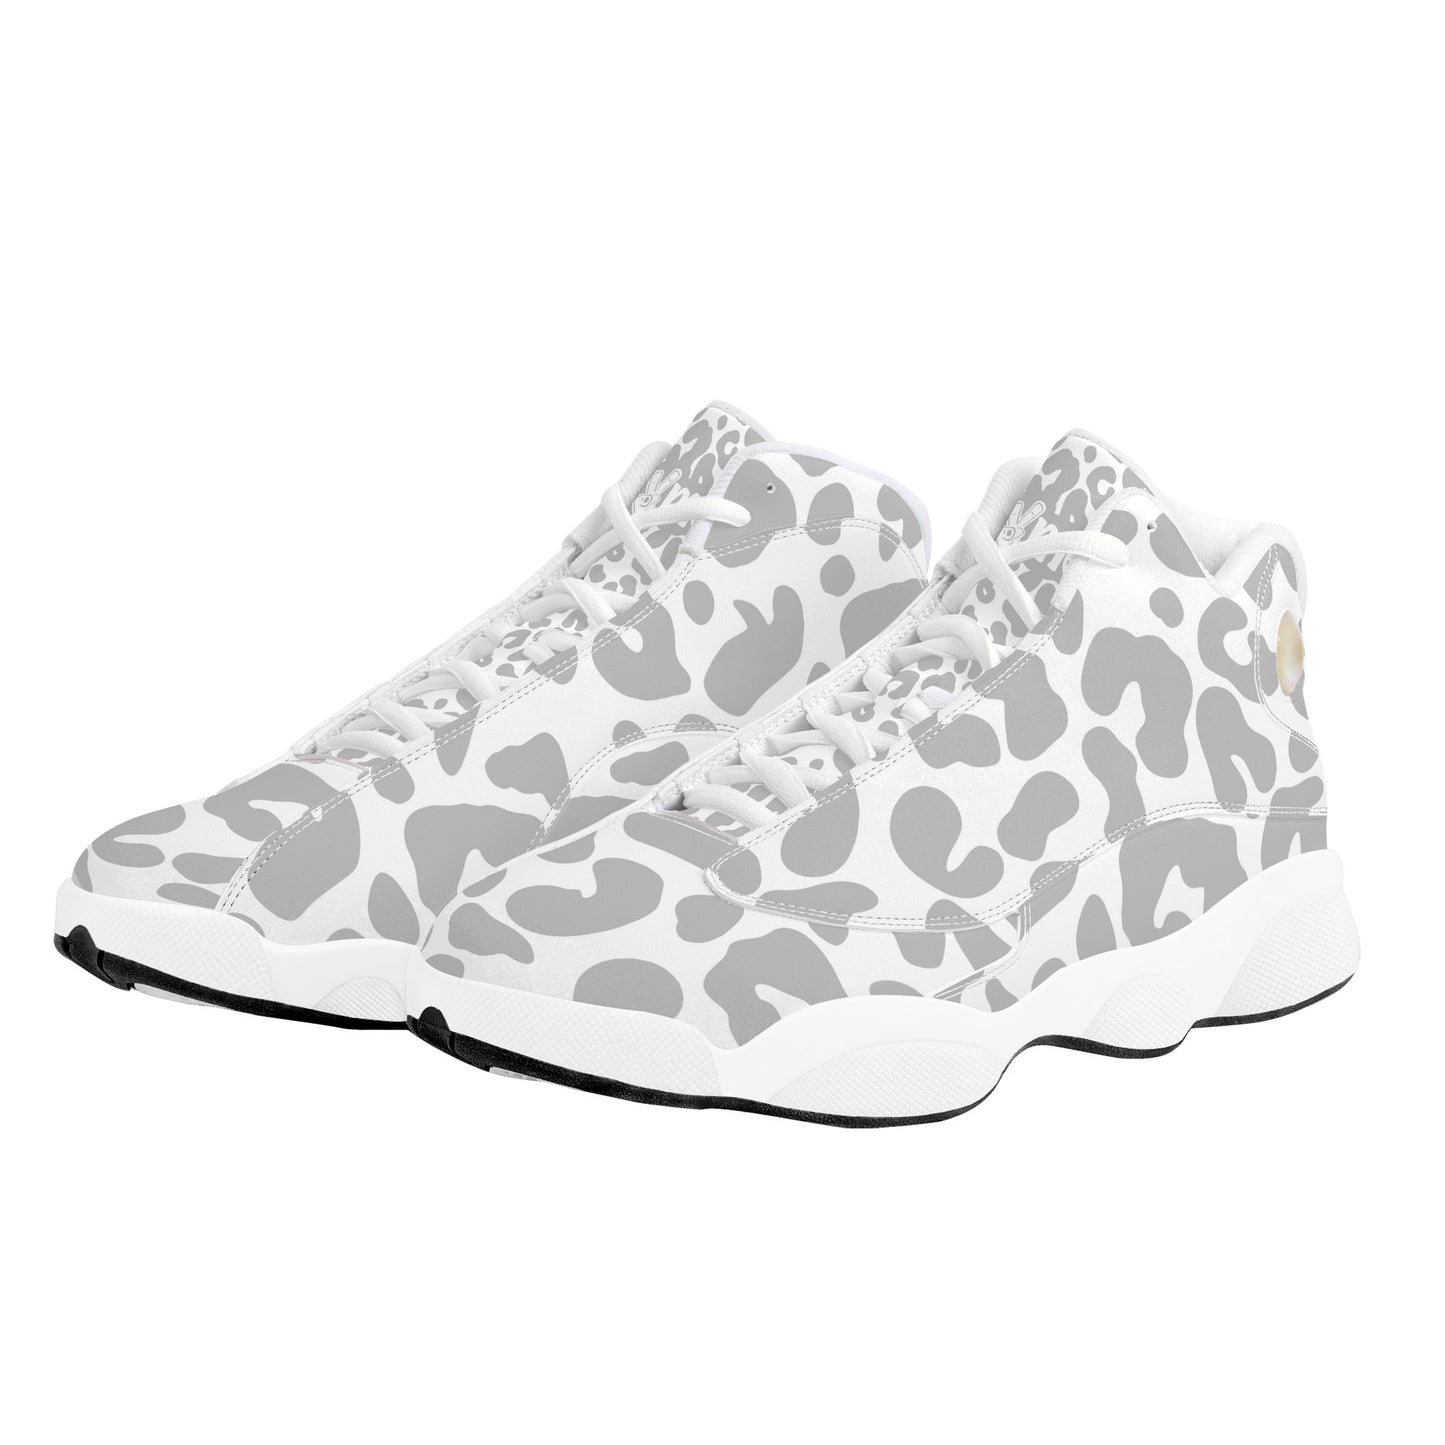 "Nix Leopard" Basketball Shoes